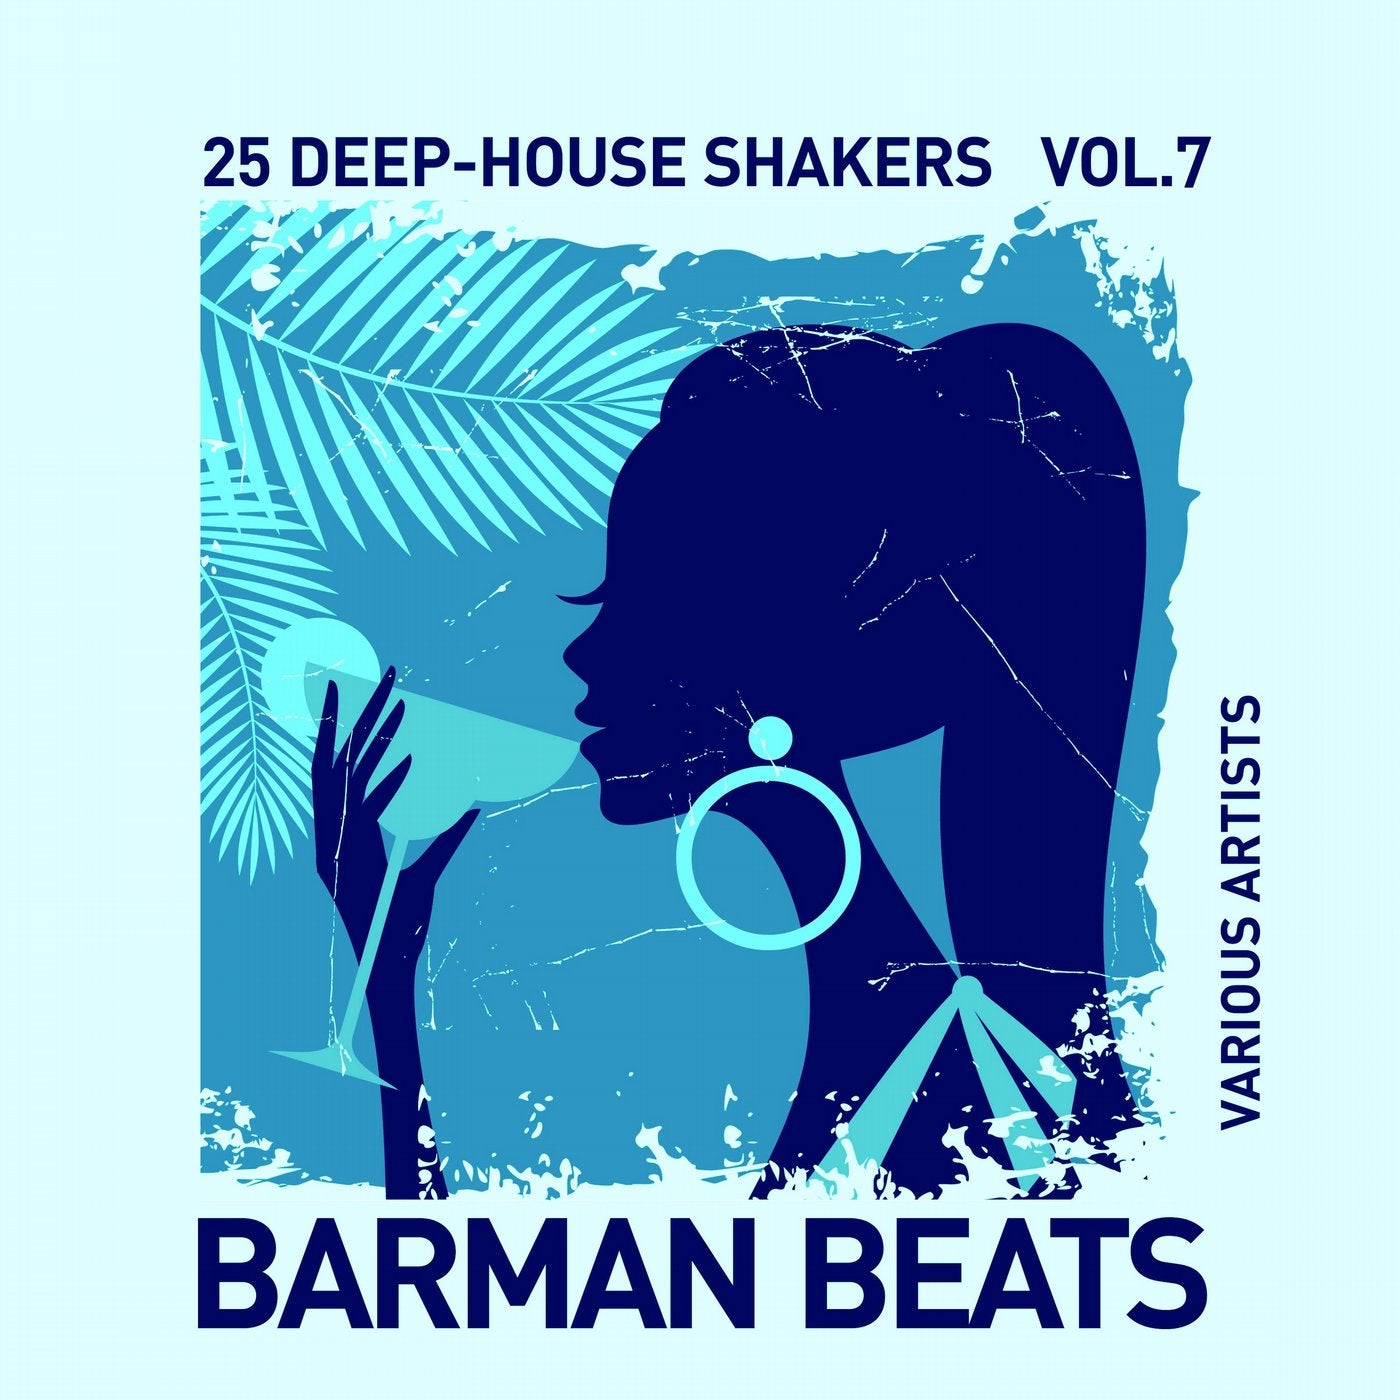 Barman Beats (25 Deep-House Shakers), Vol. 7